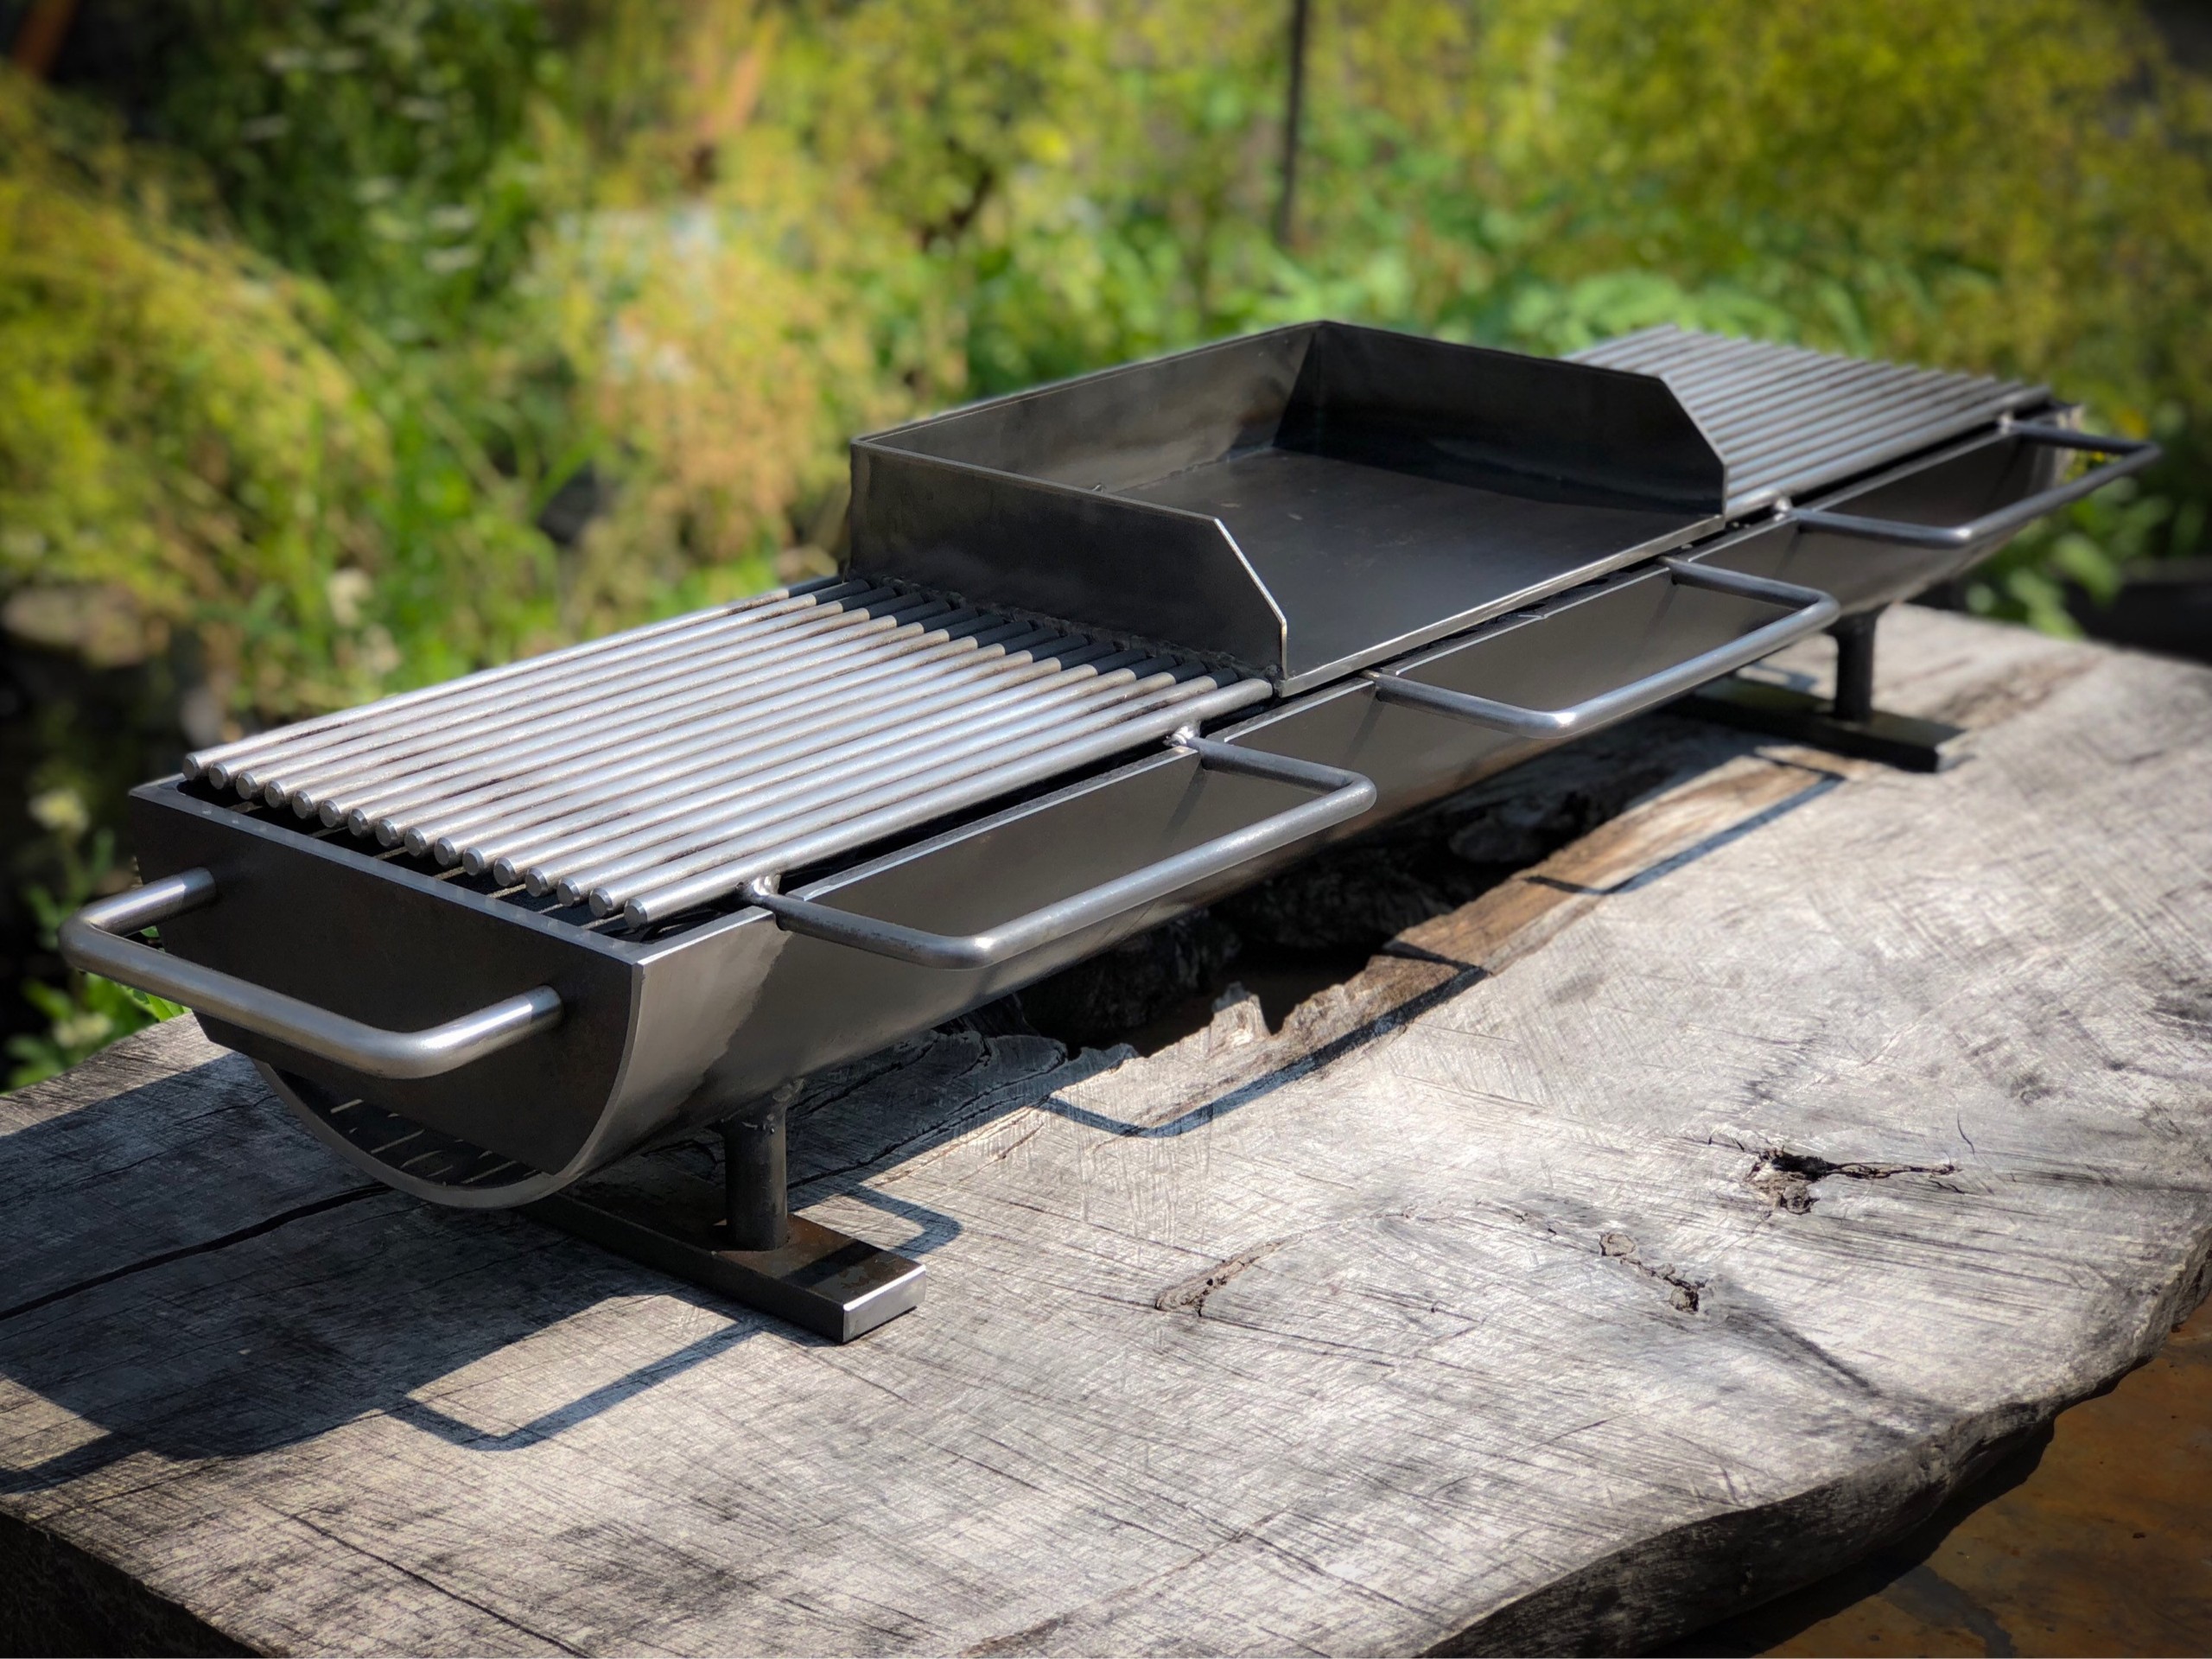 The new 836 3 top hibachi grill